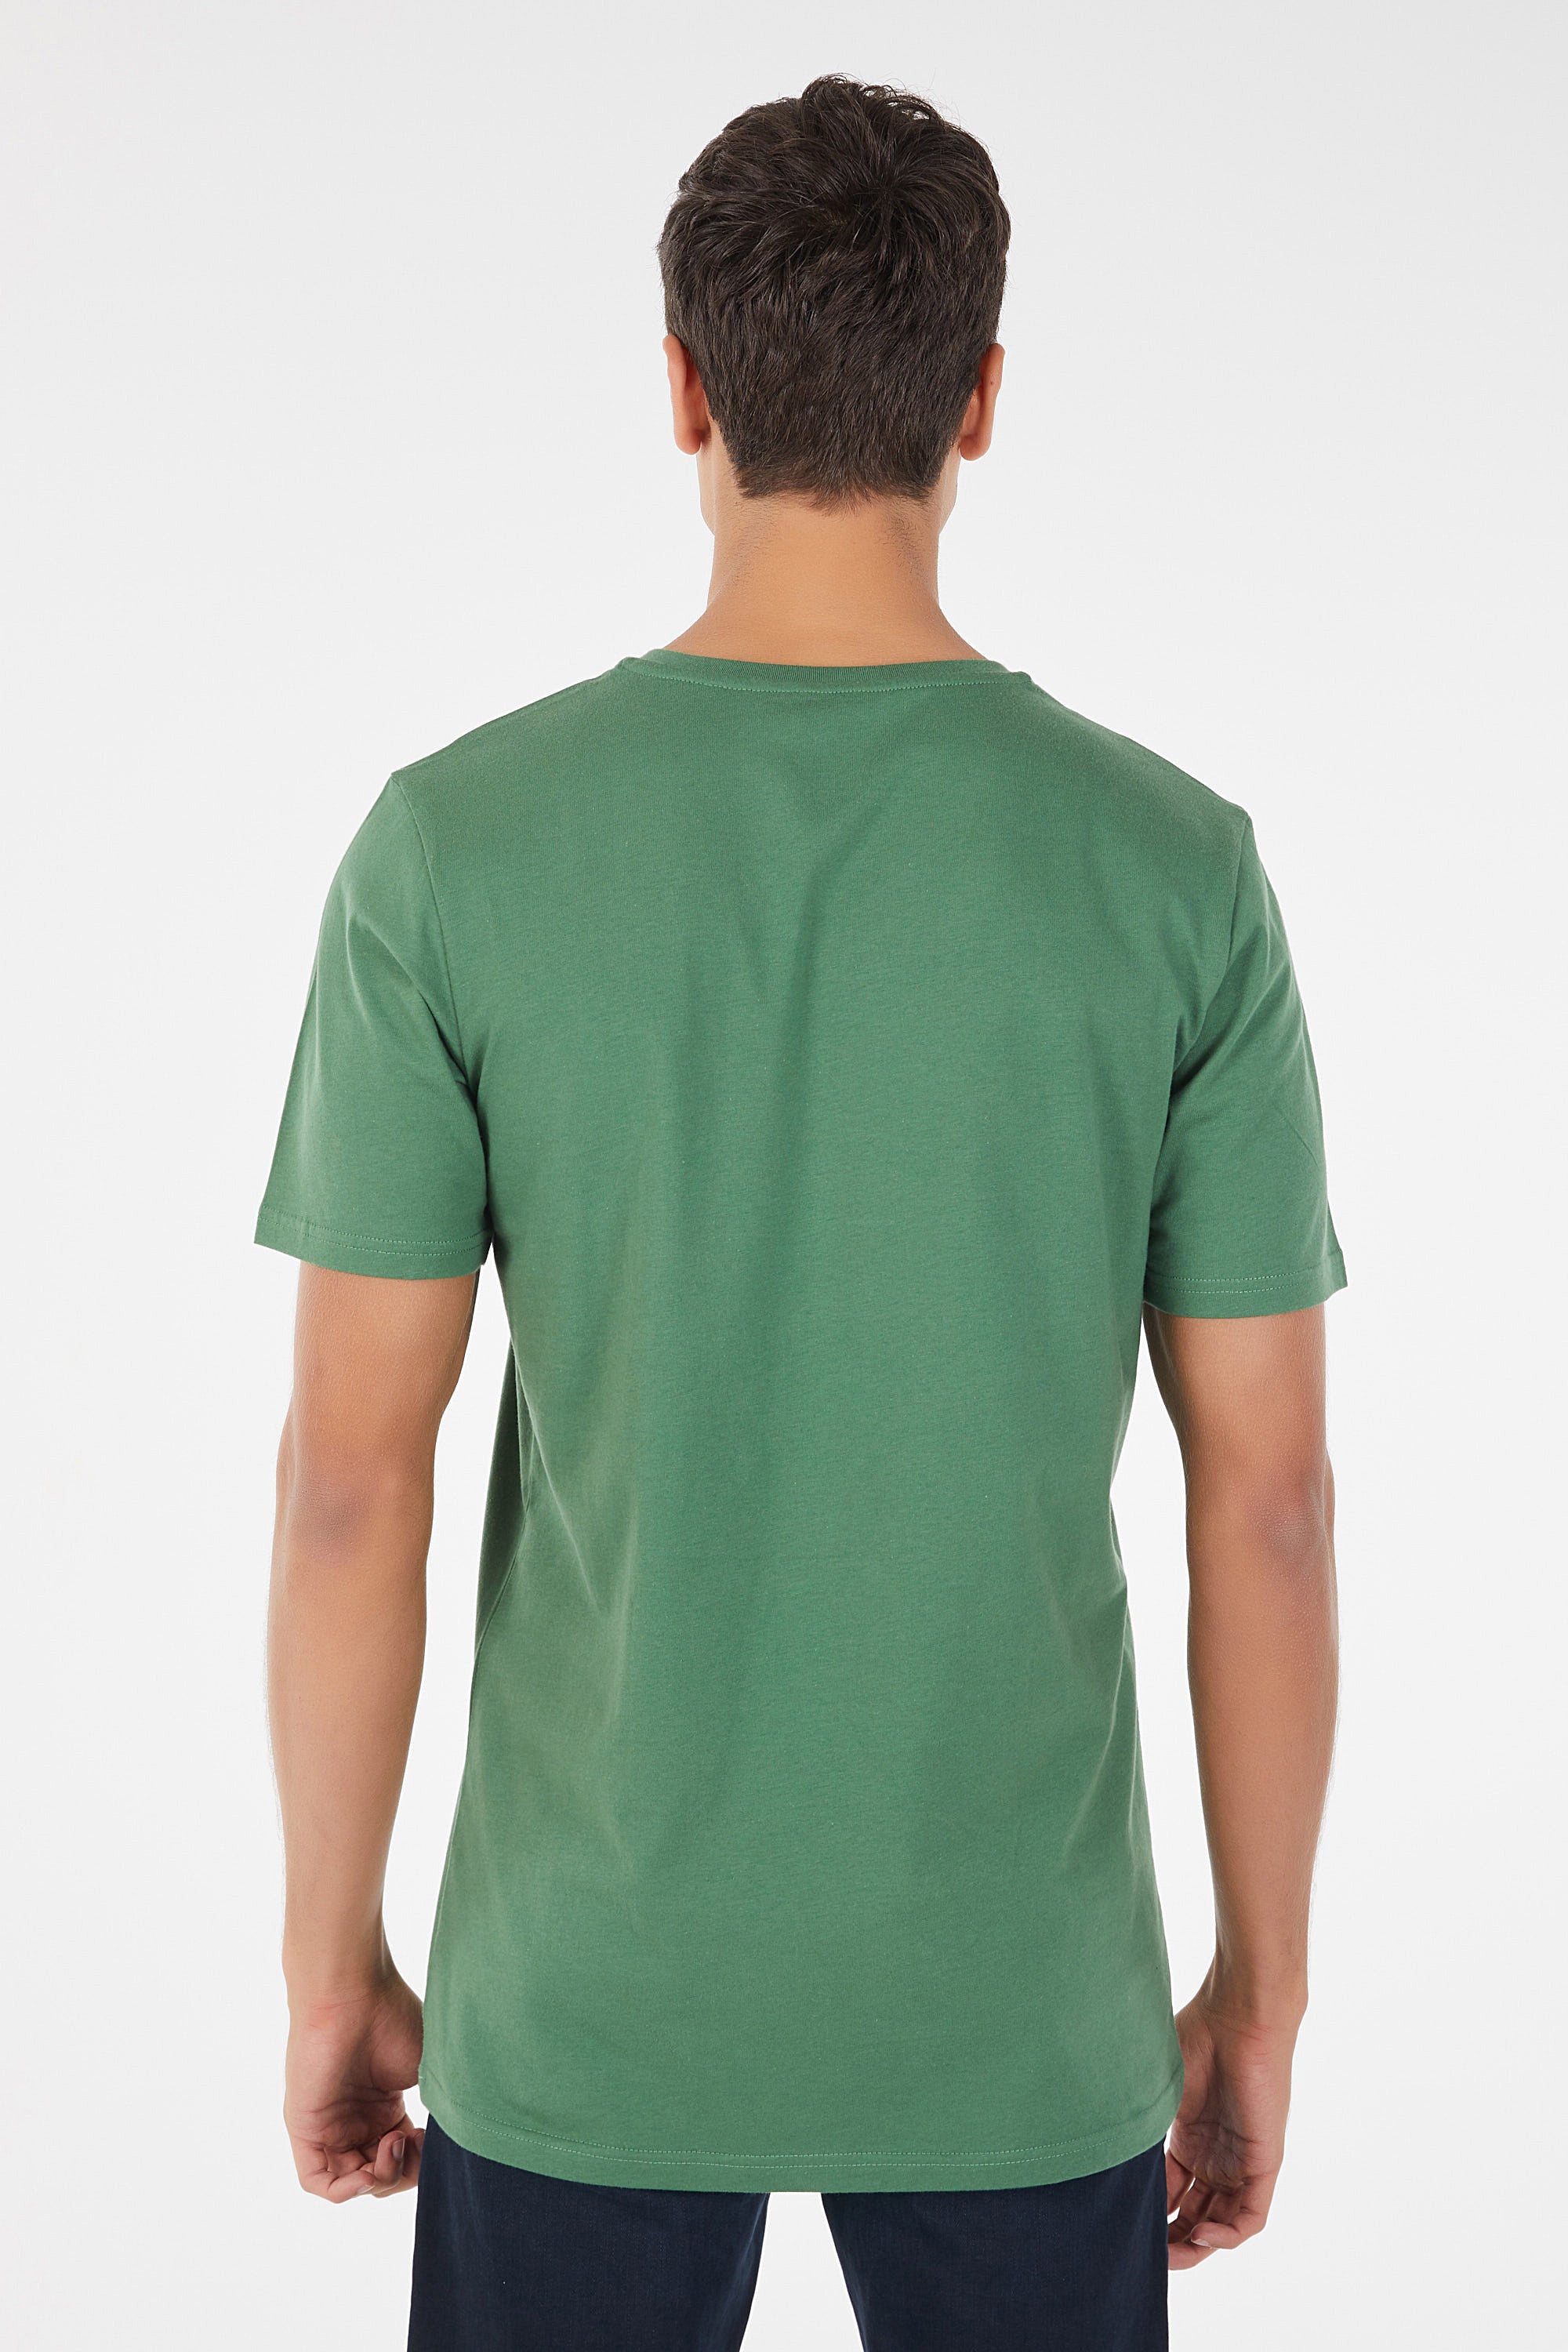 Ajax Grass Green T-Shirt For Man | Vary Fits